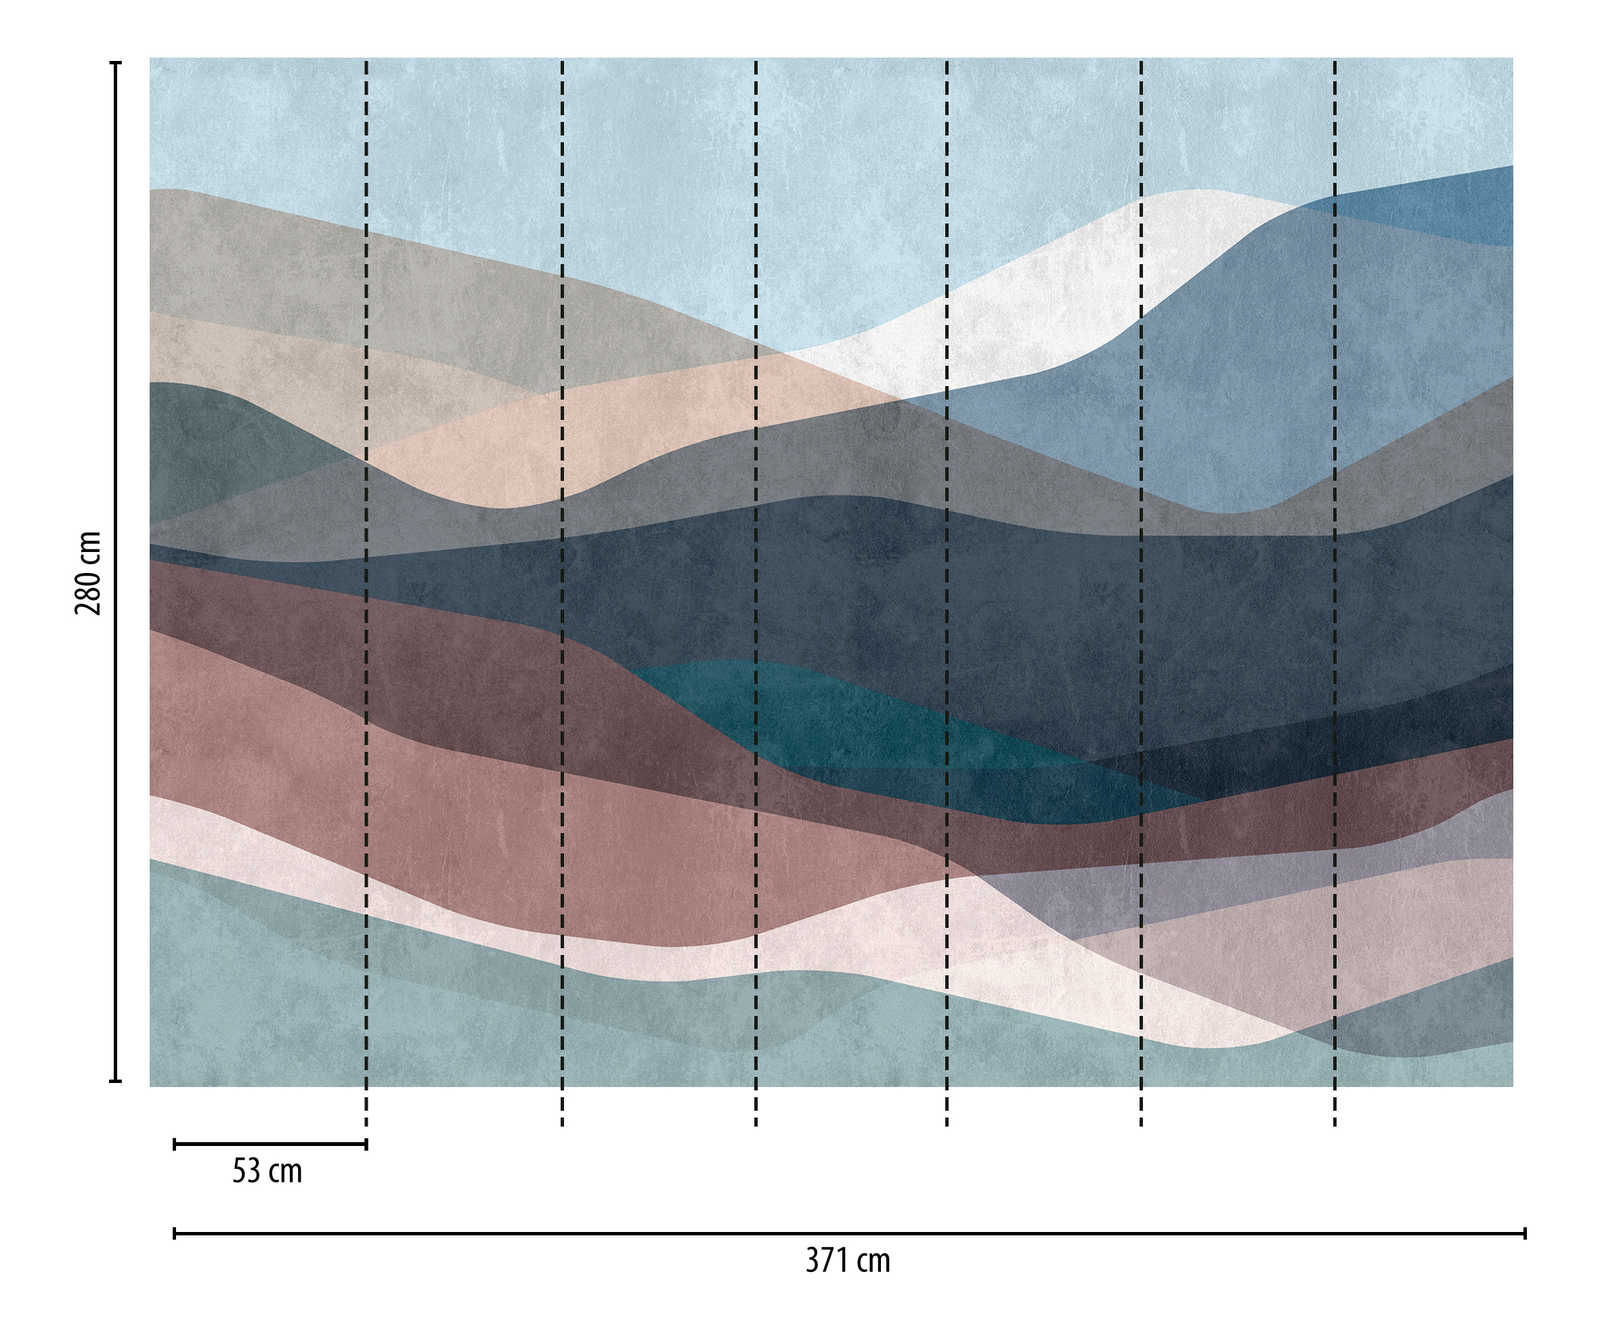             Tapeten-Neuheit – Abstrakte Motivtapete Landschaft mit Putzstruktur
        